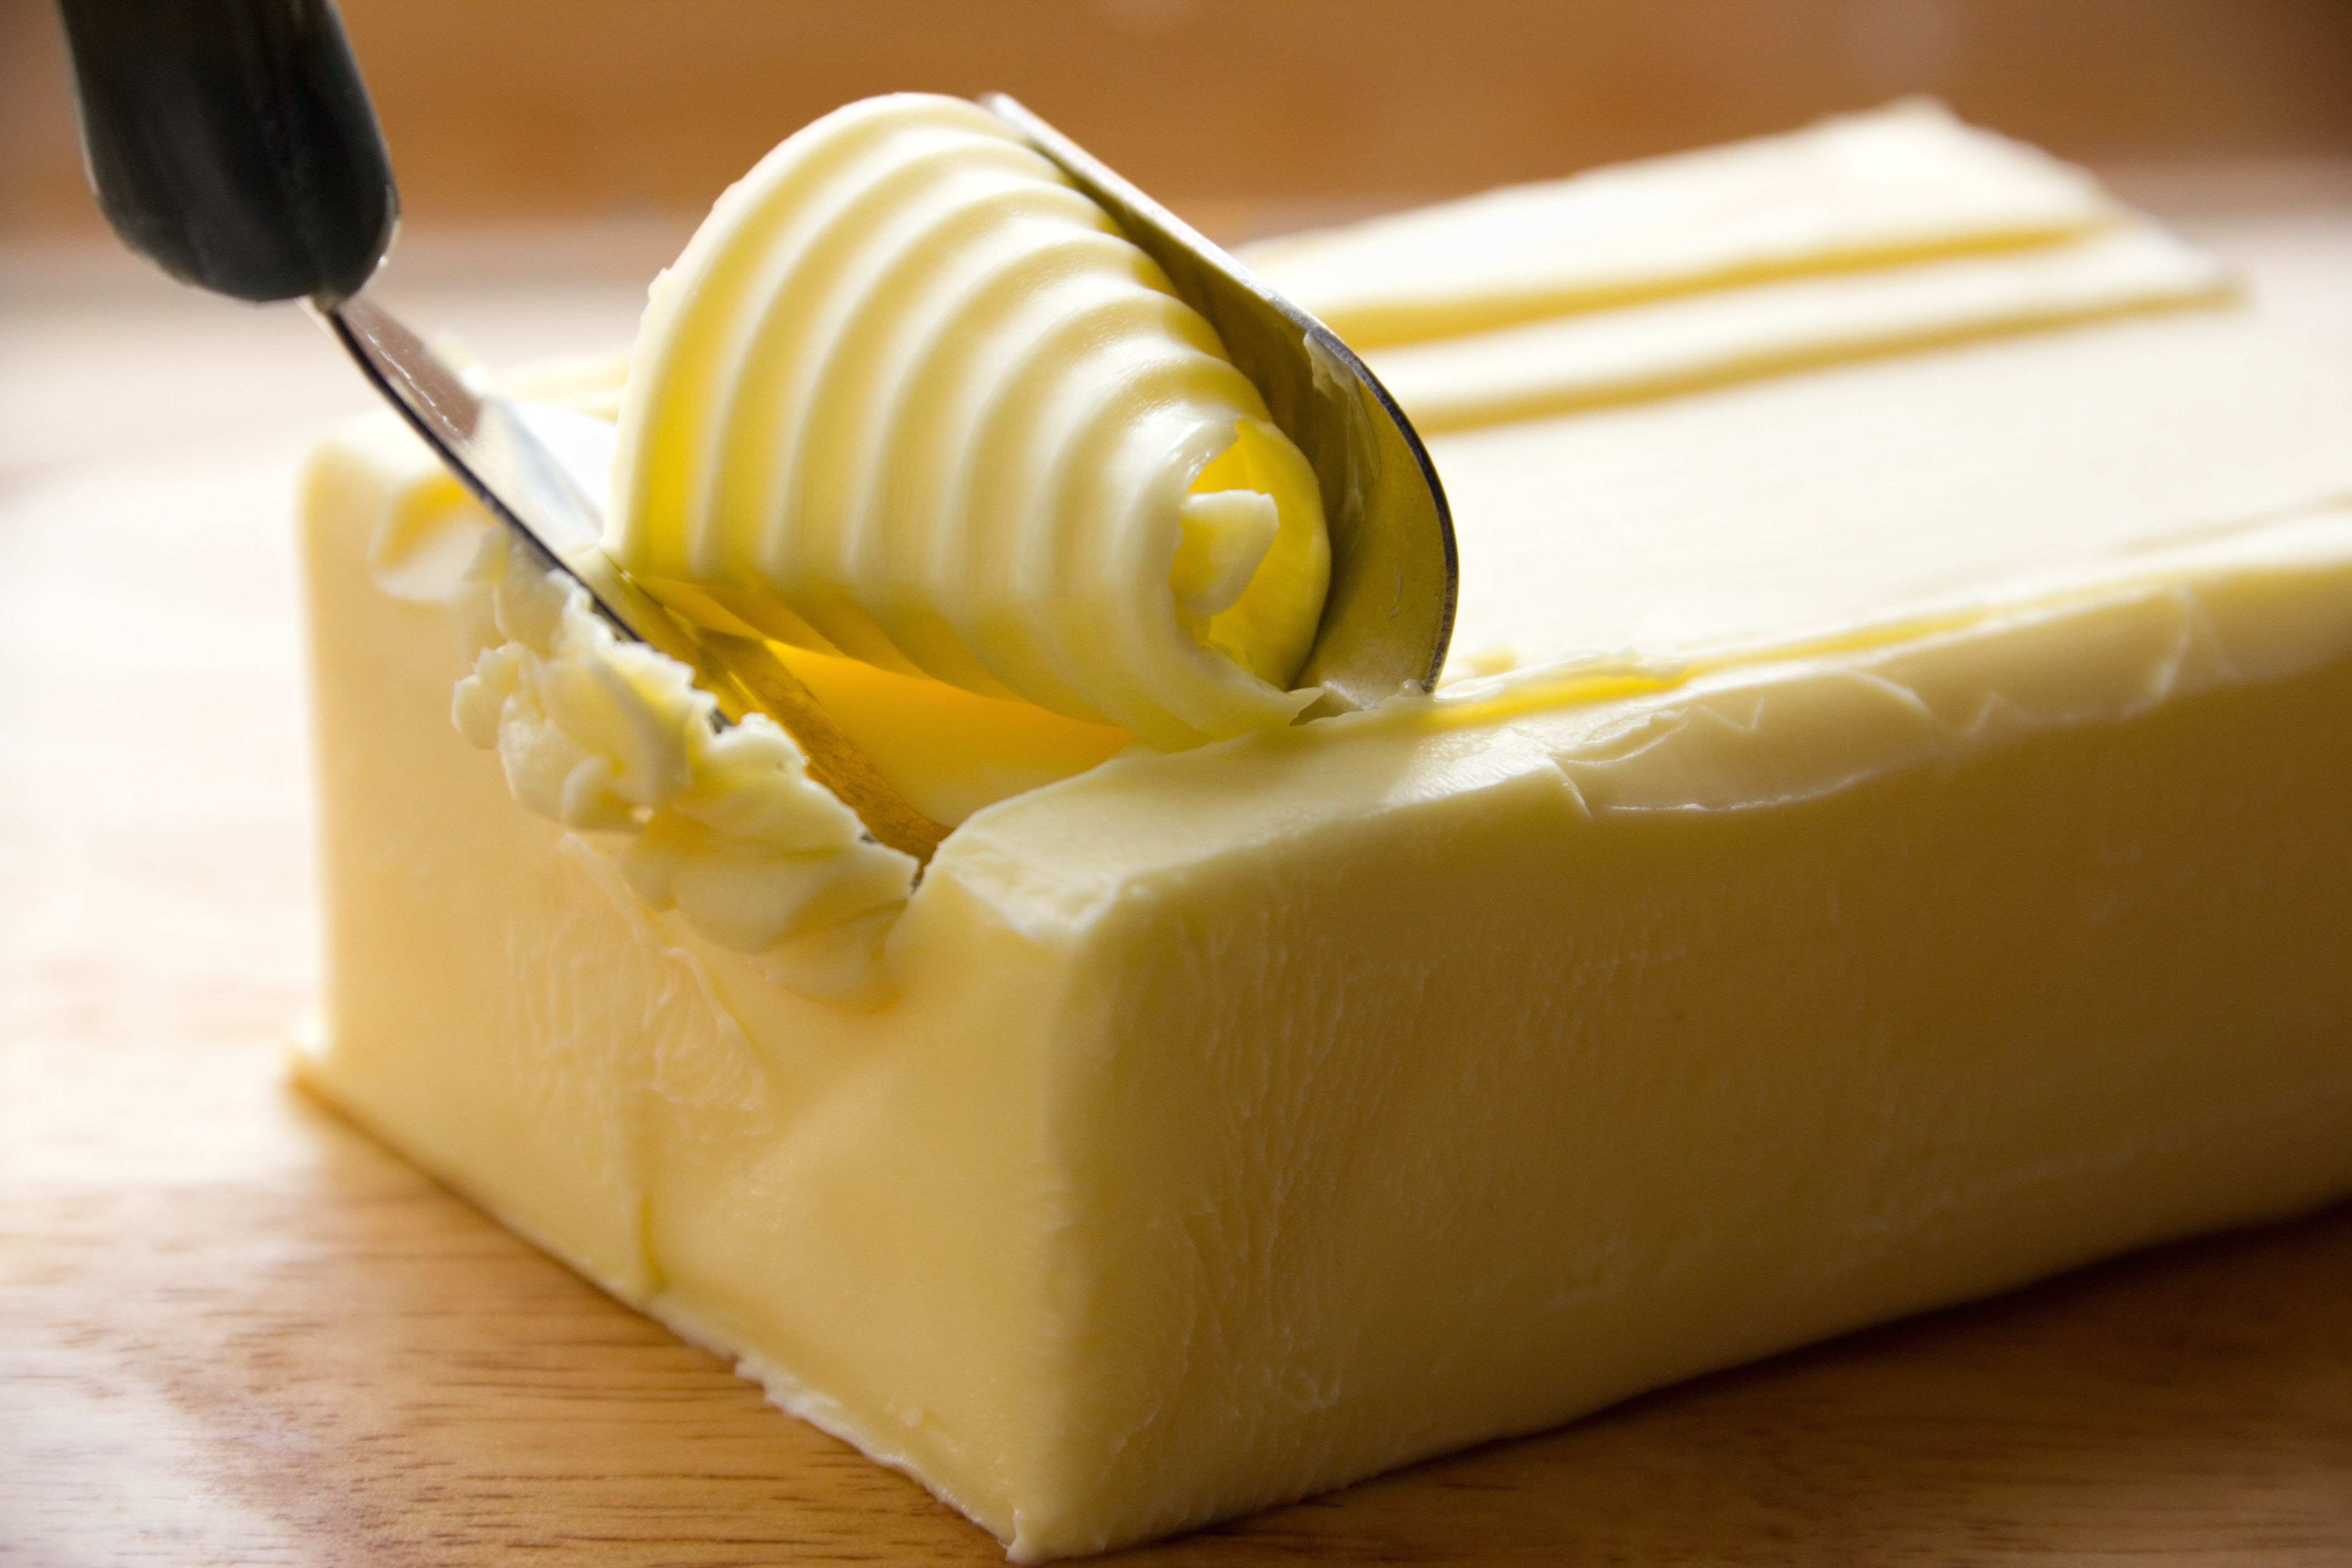 Irish butter exports reach record levels | IrishCentral.com